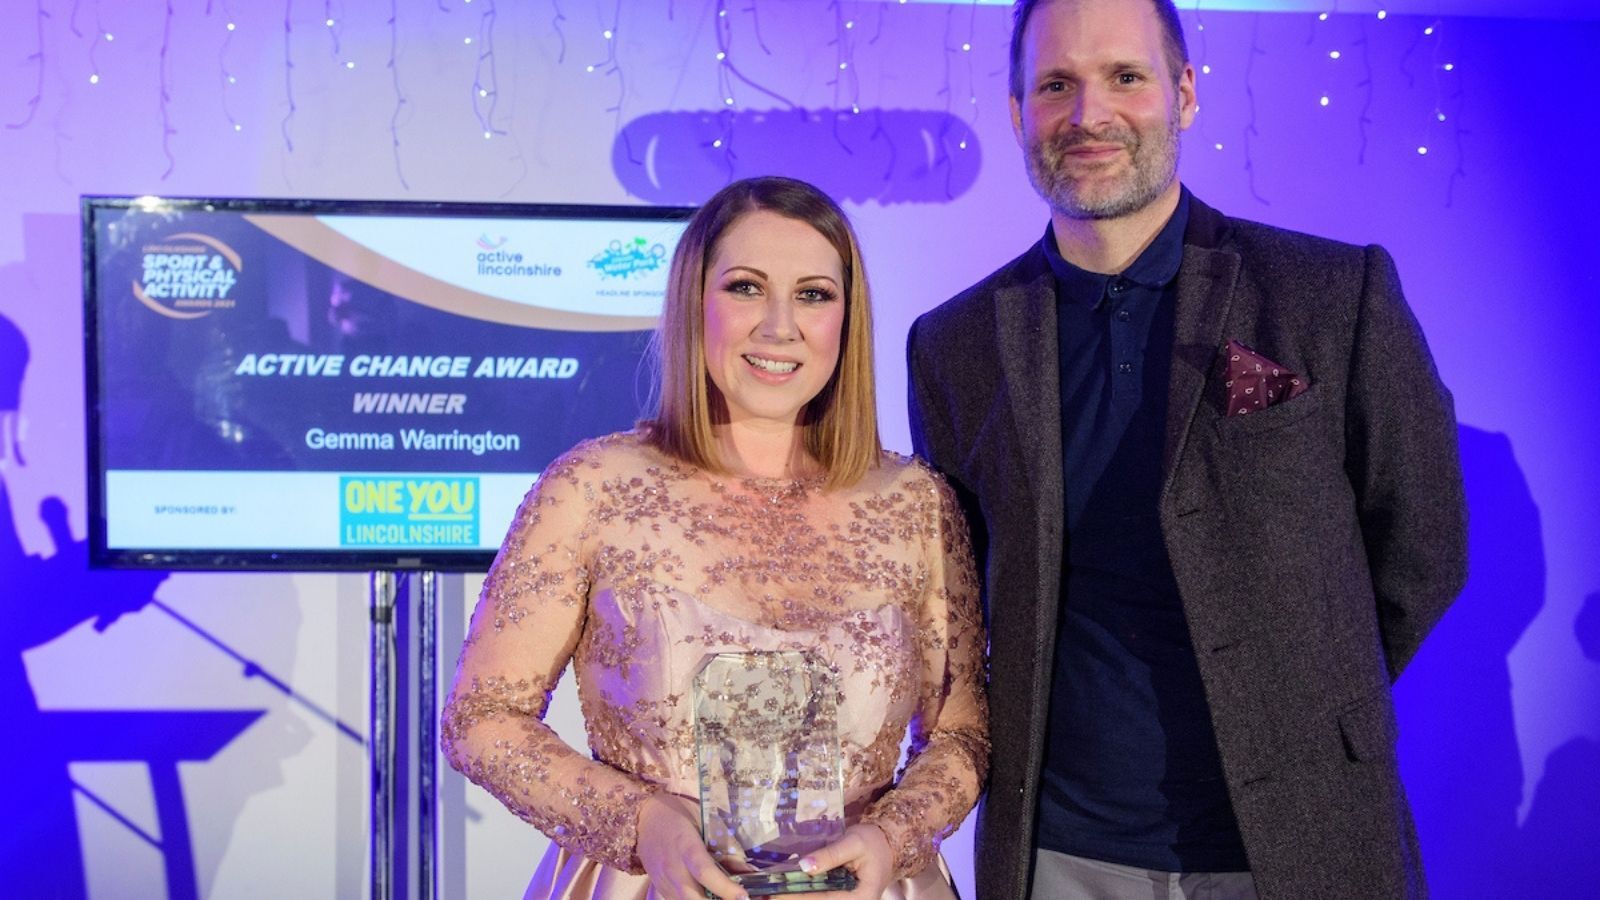 Lincolnshire's Active Change Award Winner, Gemma Warrington